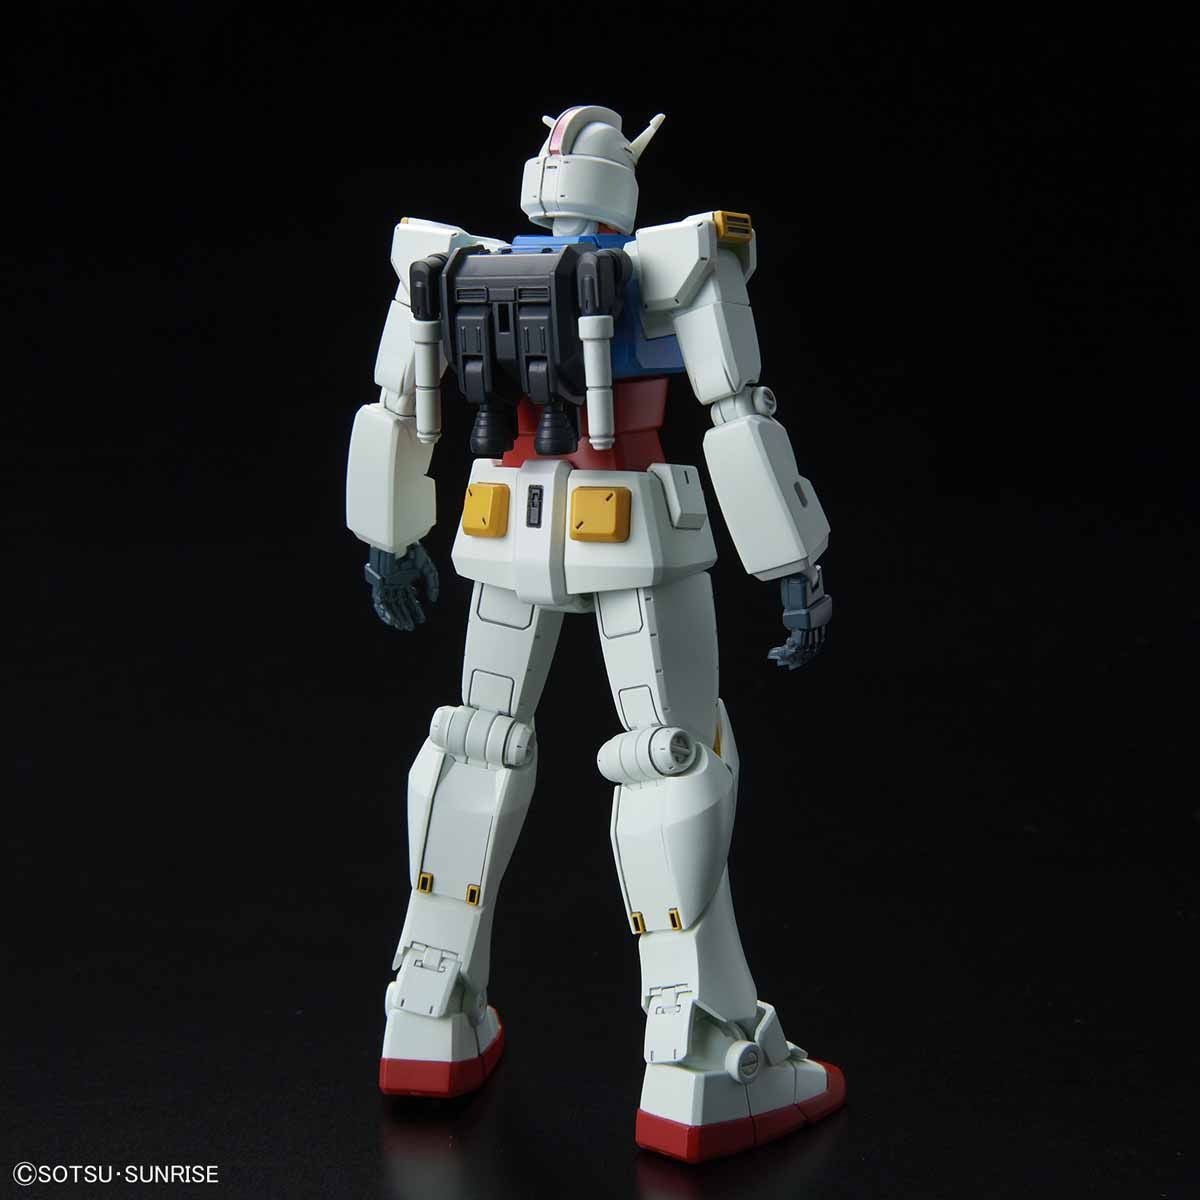 HG 1/144 Gundam G40 (Industrial Design Ver) - Glacier Hobbies - Bandai